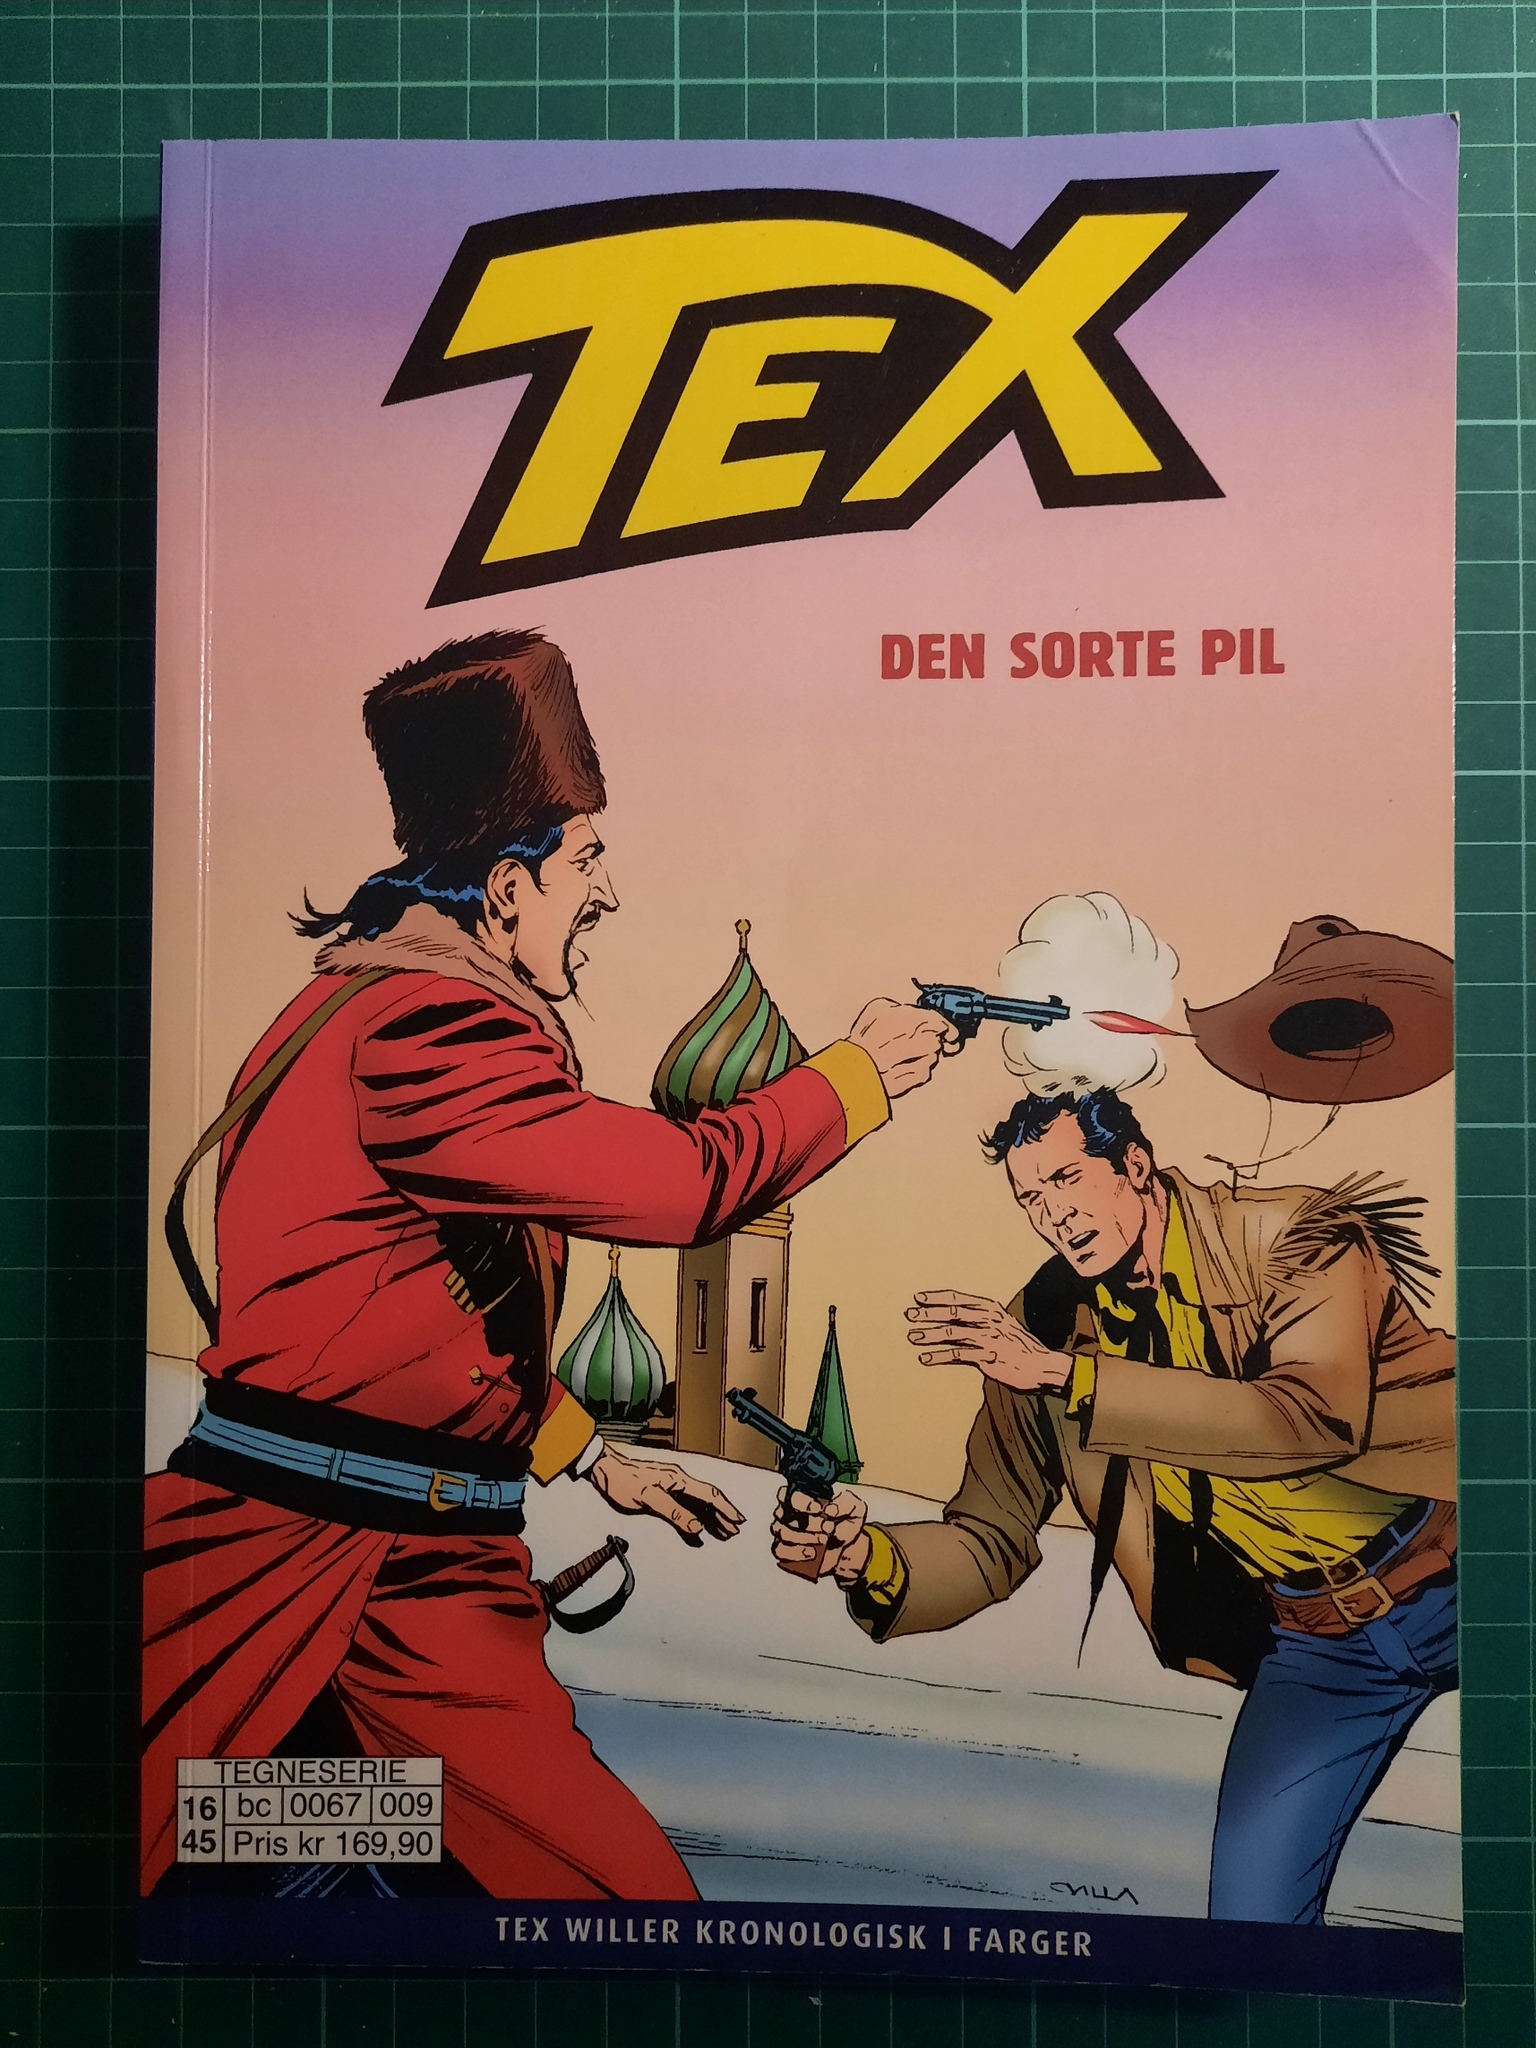 Tex Willer kronologisk i farger #36